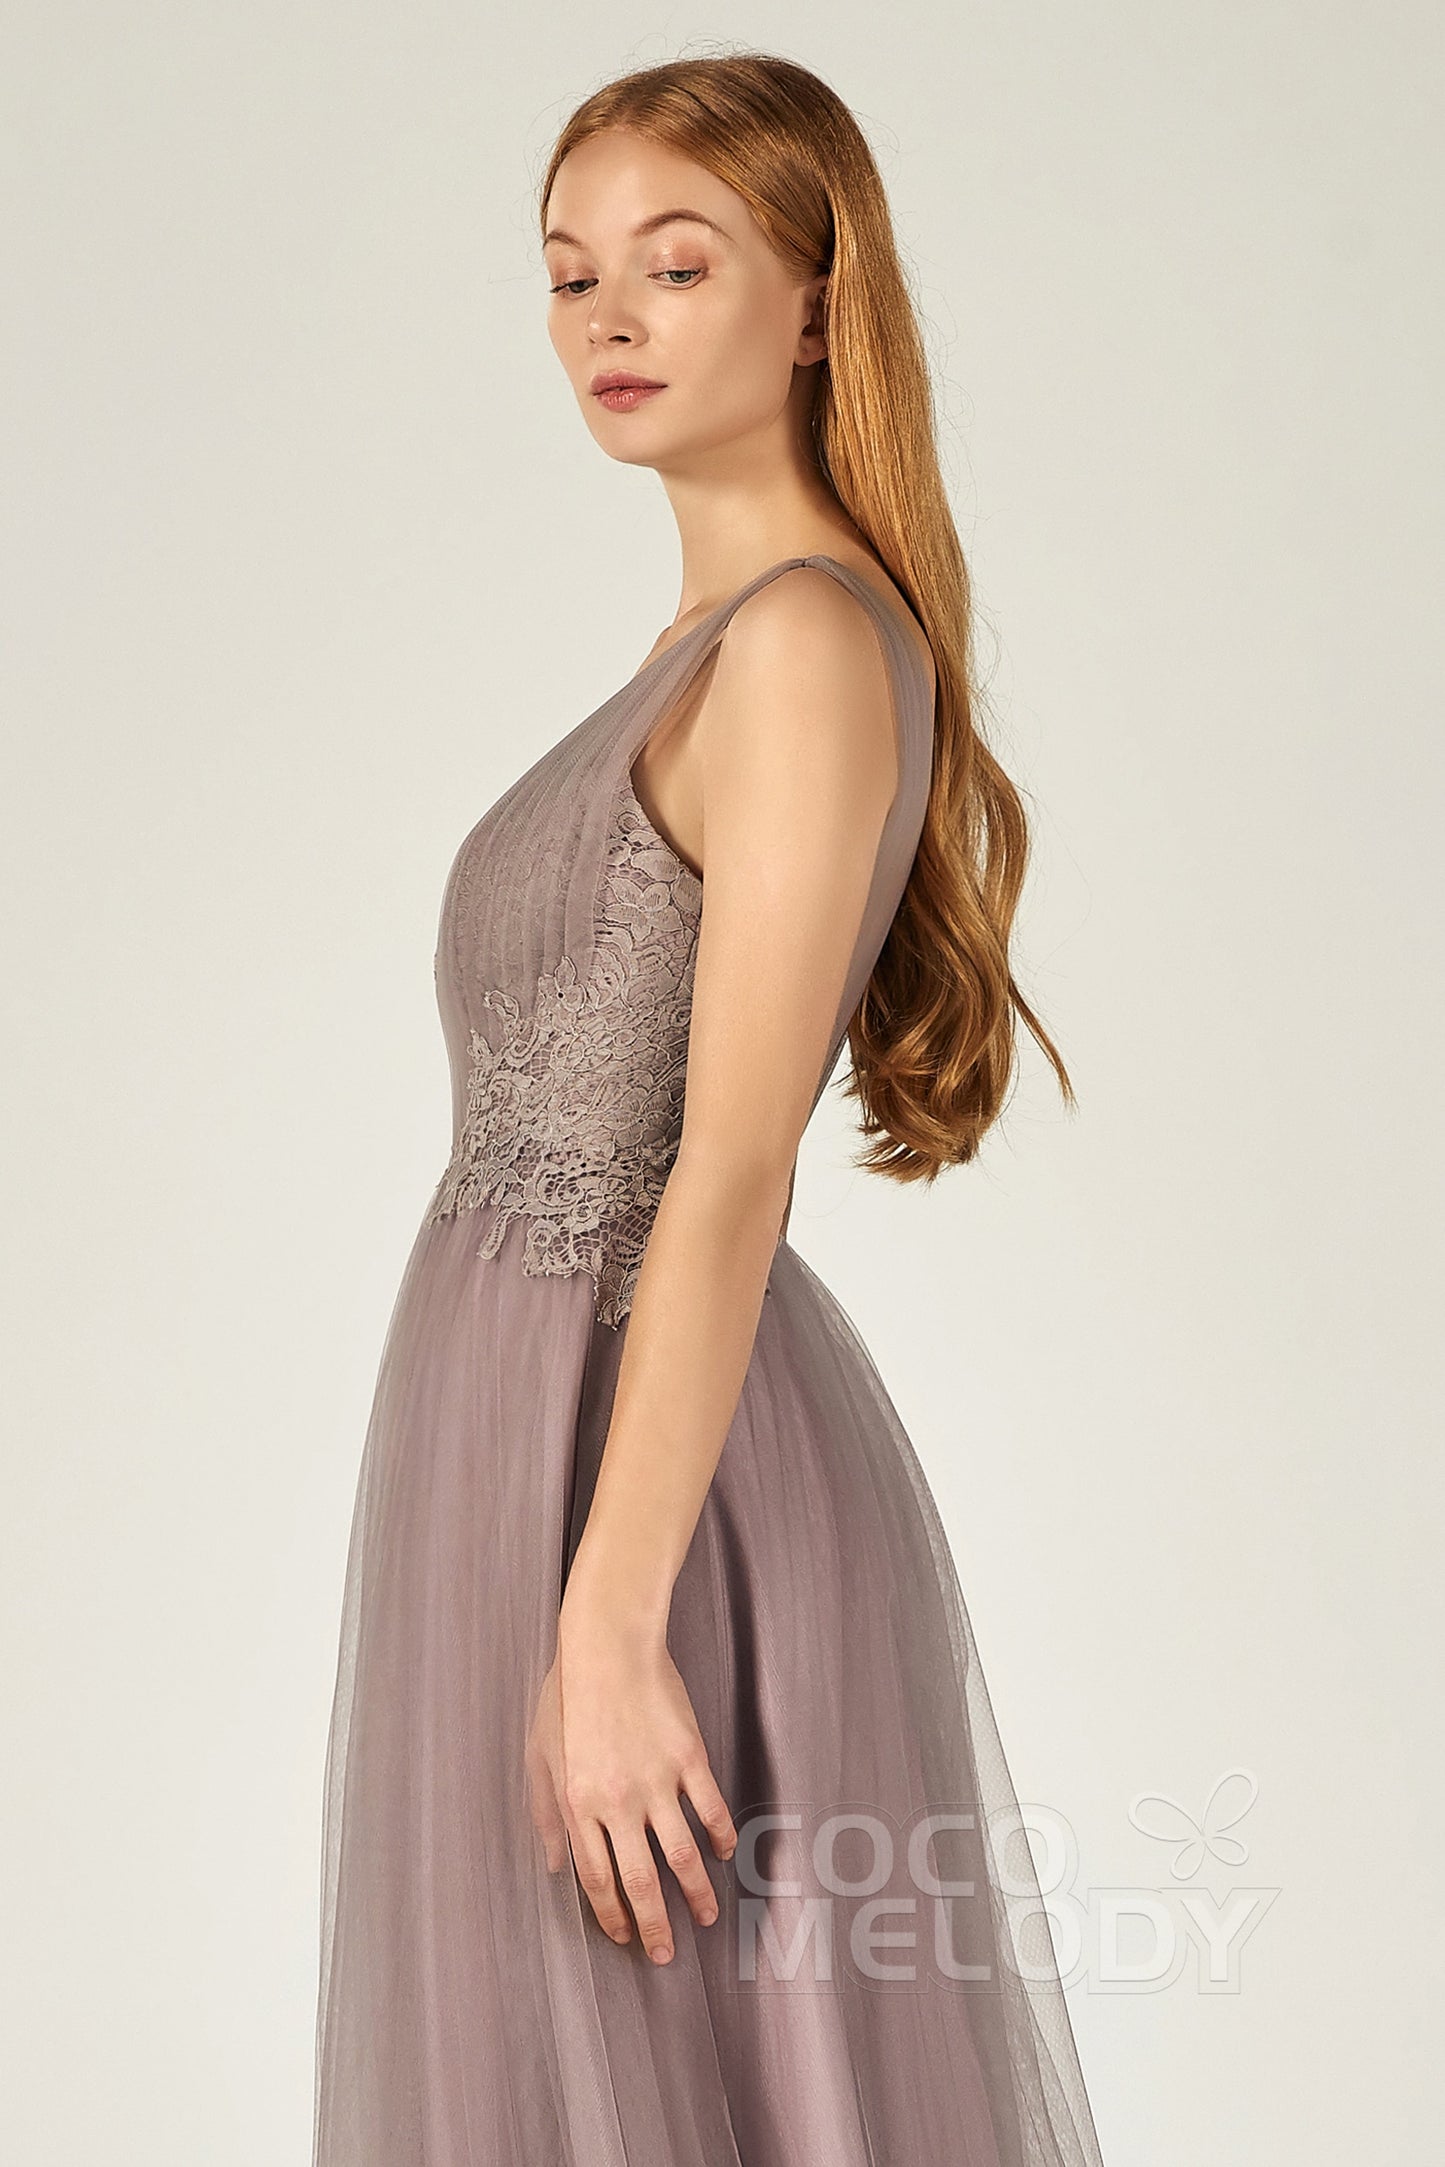 A-Line Floor Length Tulle/Lace Bridesmaid Dress CB0381